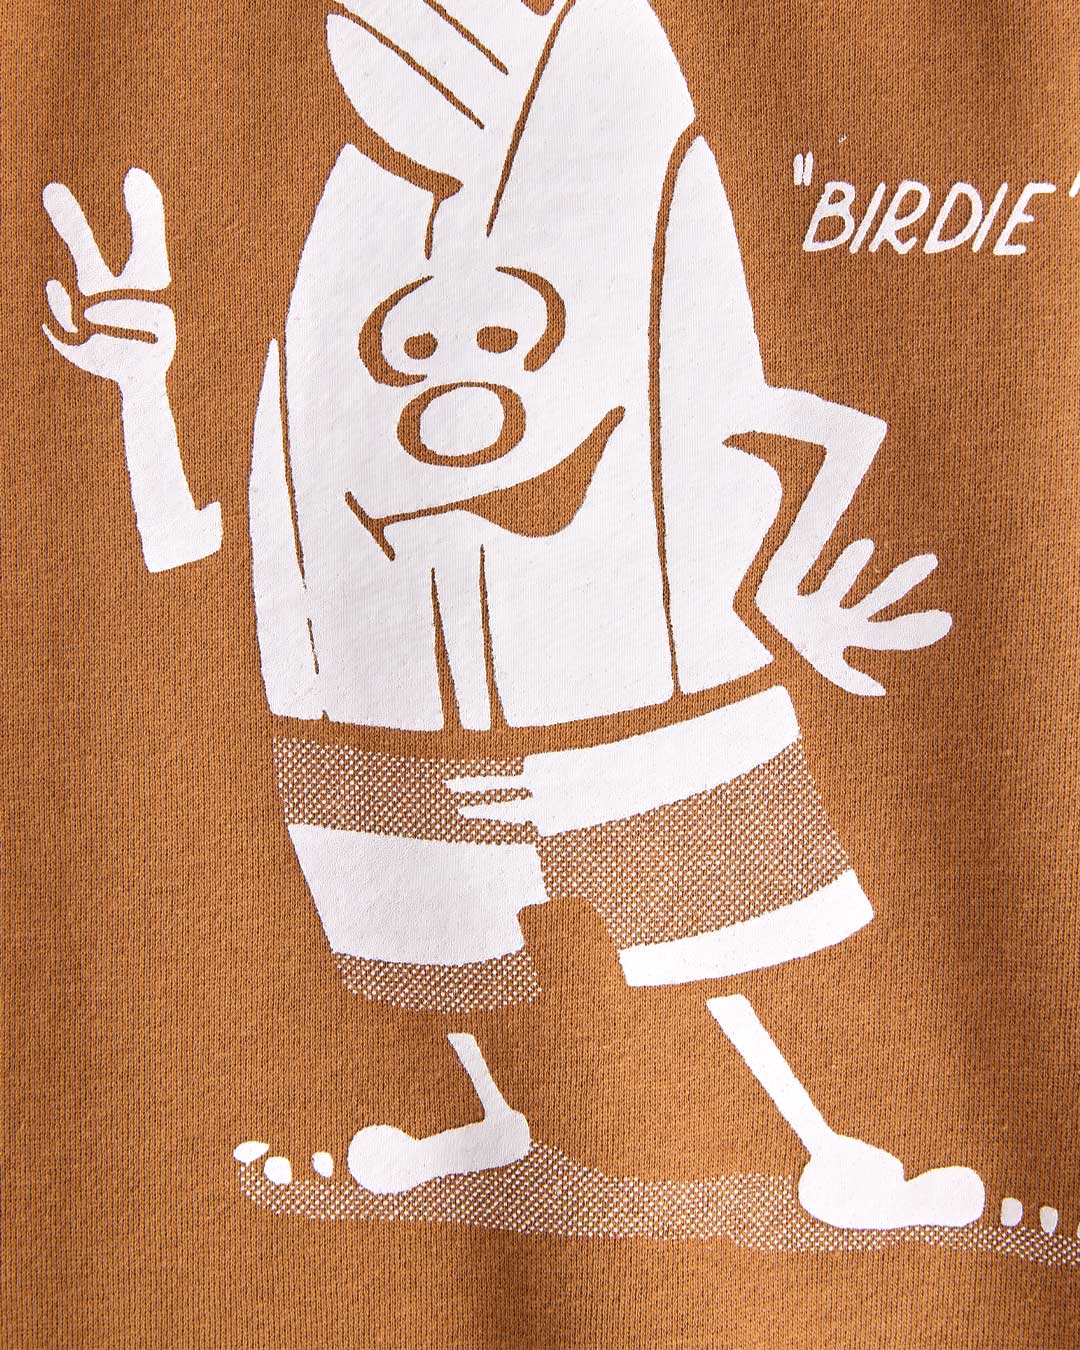 Birdwell 
'61 Sweatshirt - Saddle - Sun Diego Boardshop